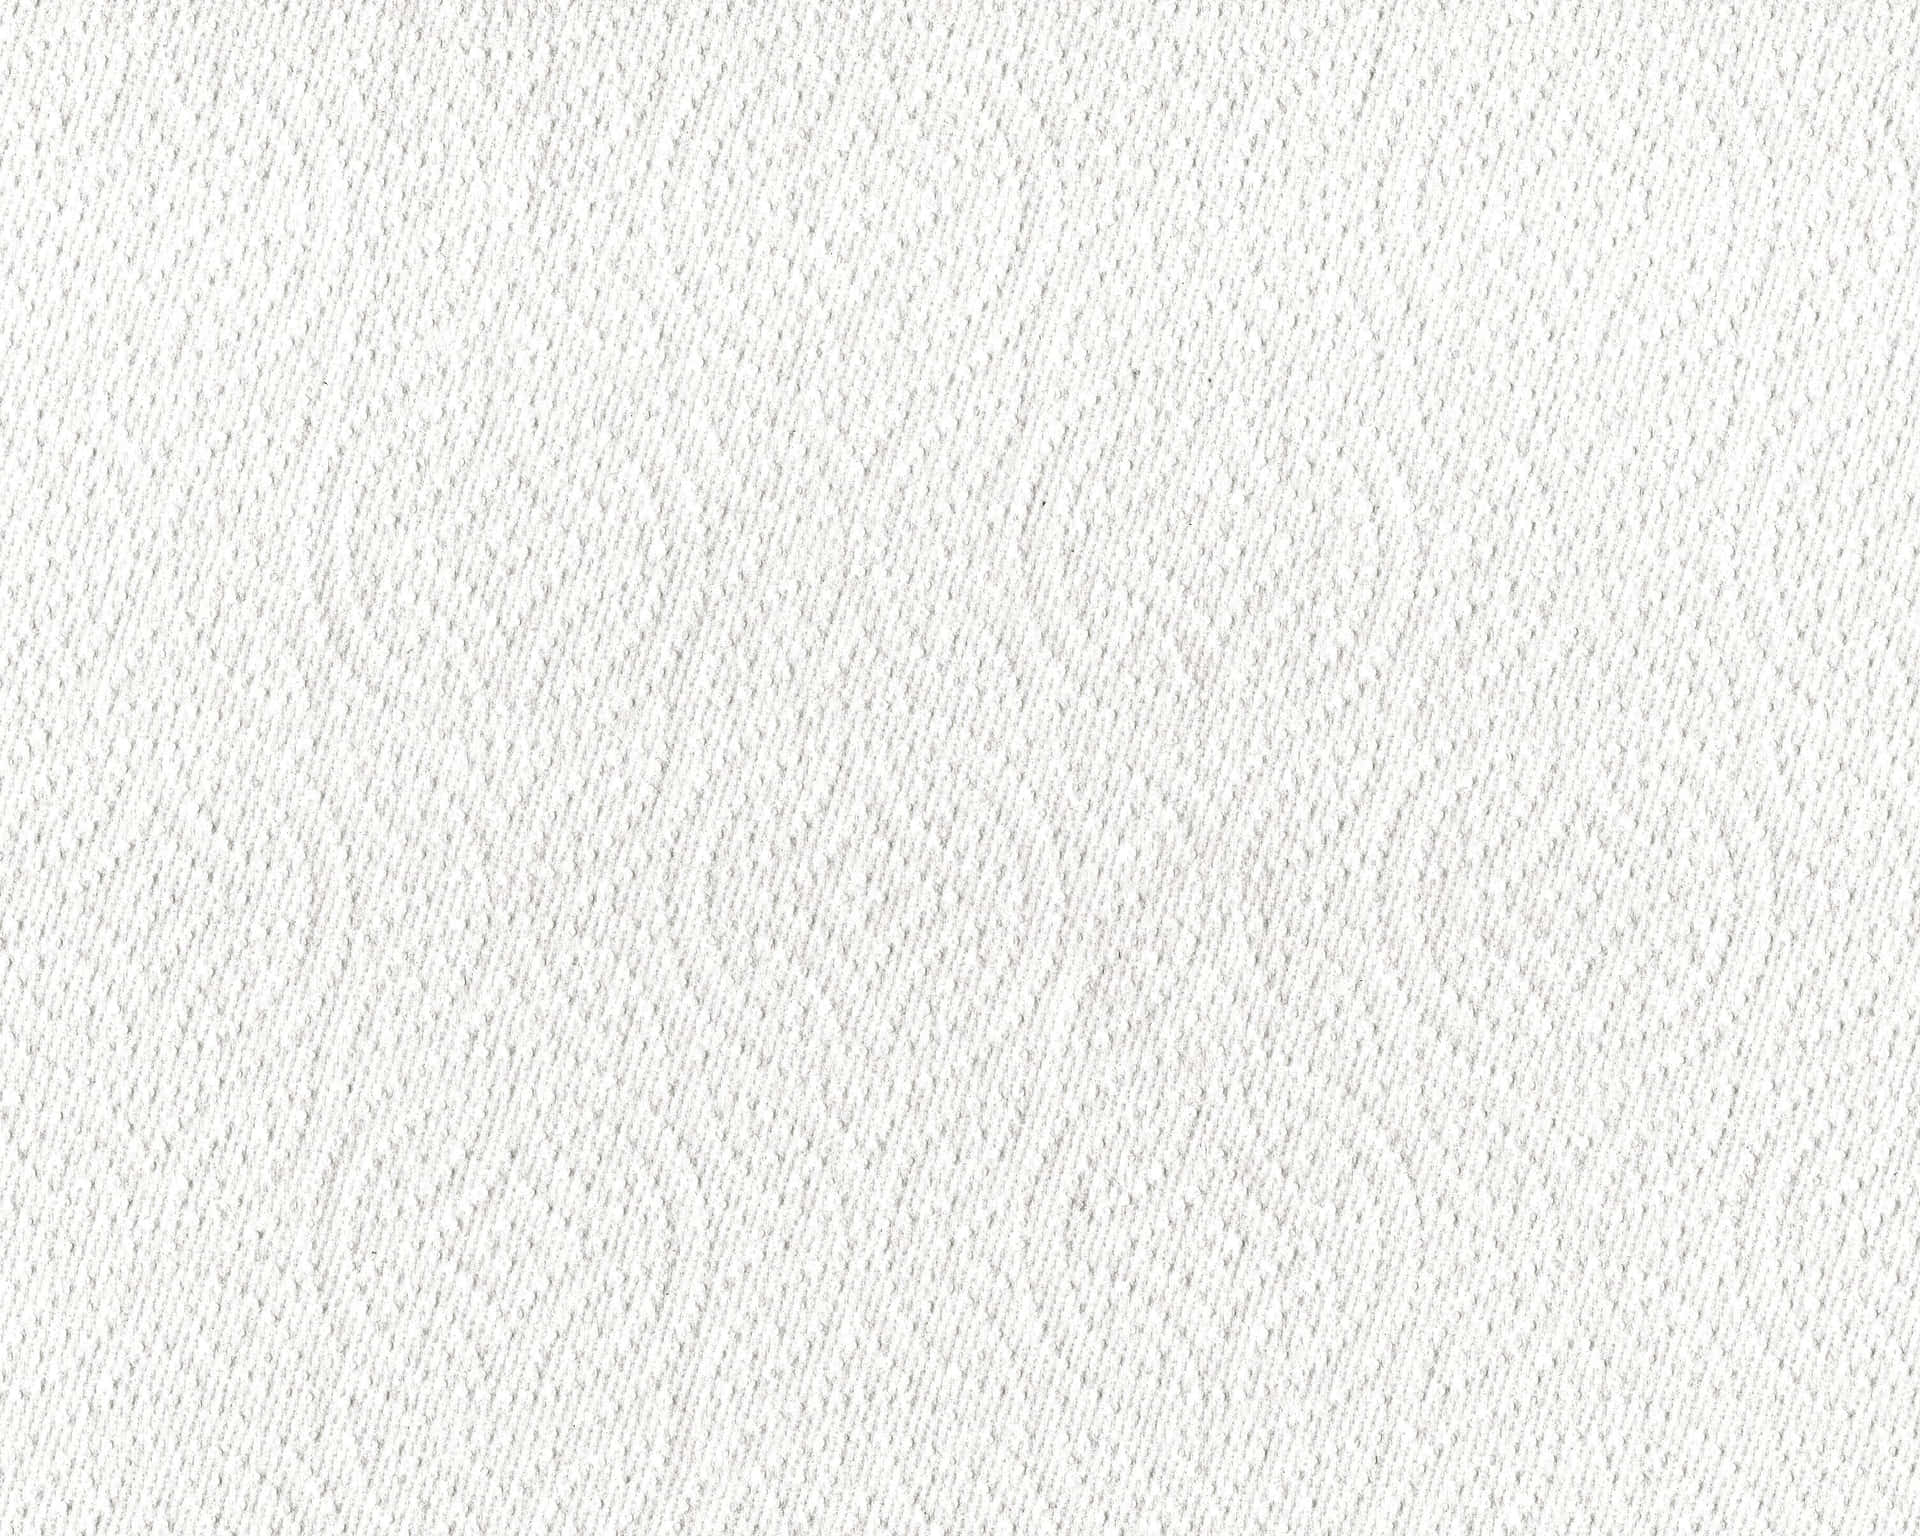 Circular Design White Texture Pictures